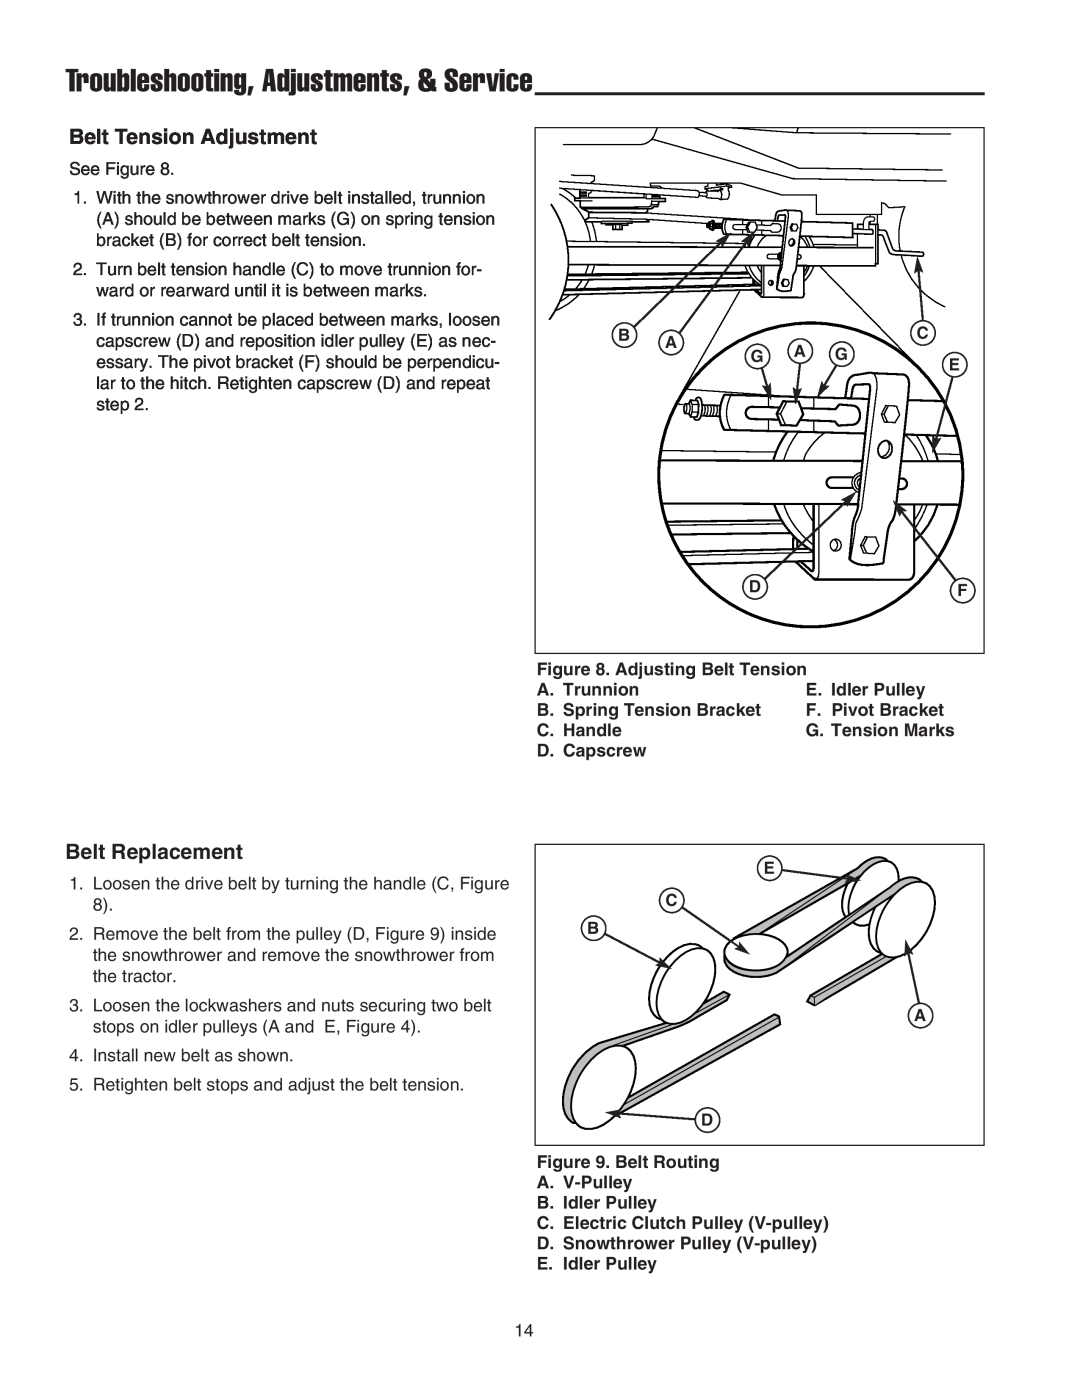 Snapper 1694296, 1694295, 1694144 manual Belt Tension Adjustment, Belt Replacement, Troubleshooting, Adjustments, & Service 